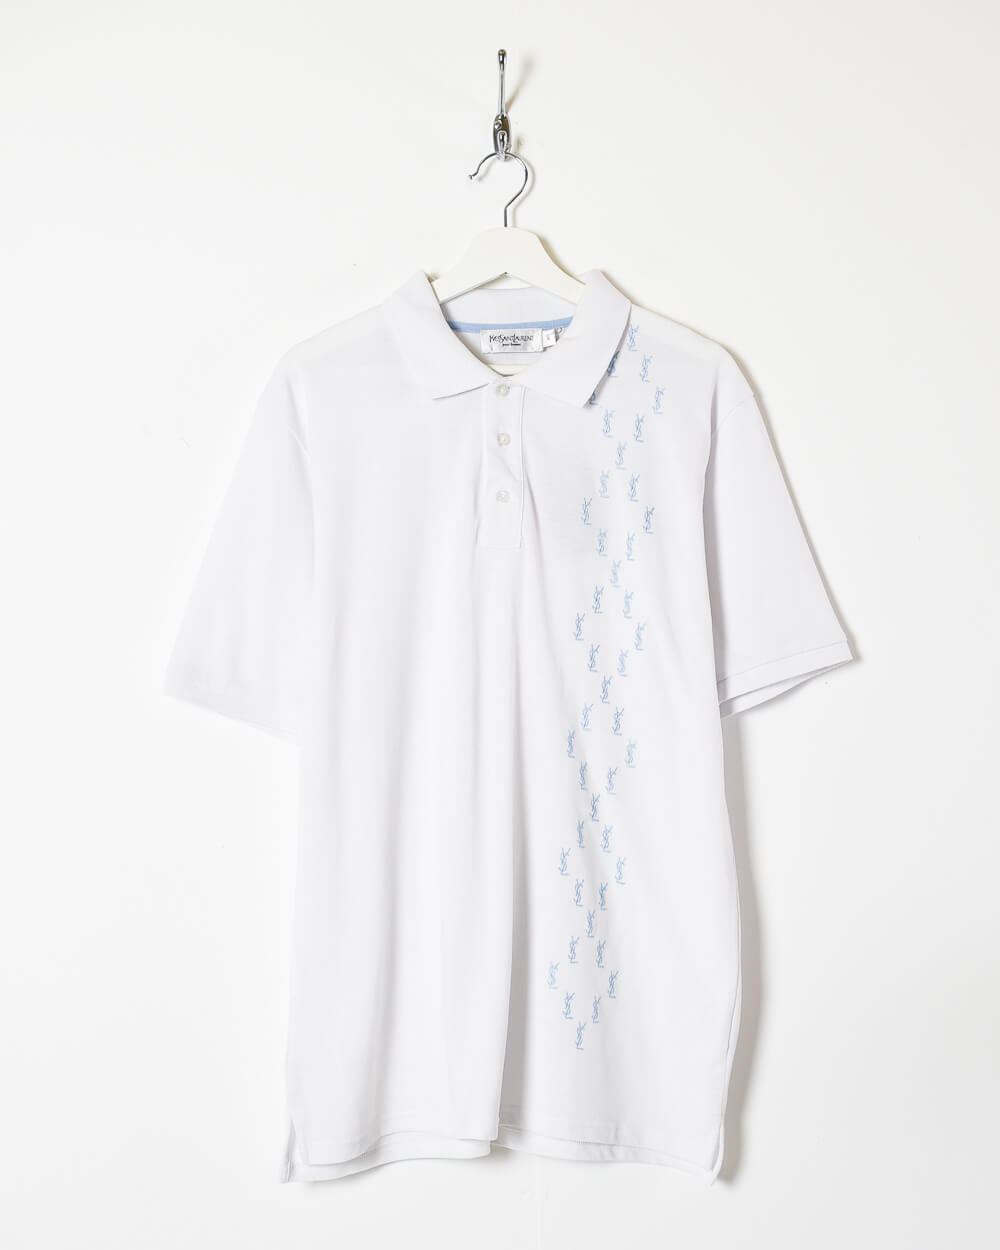 White Yves Saint Laurent Polo Shirt - X-Large